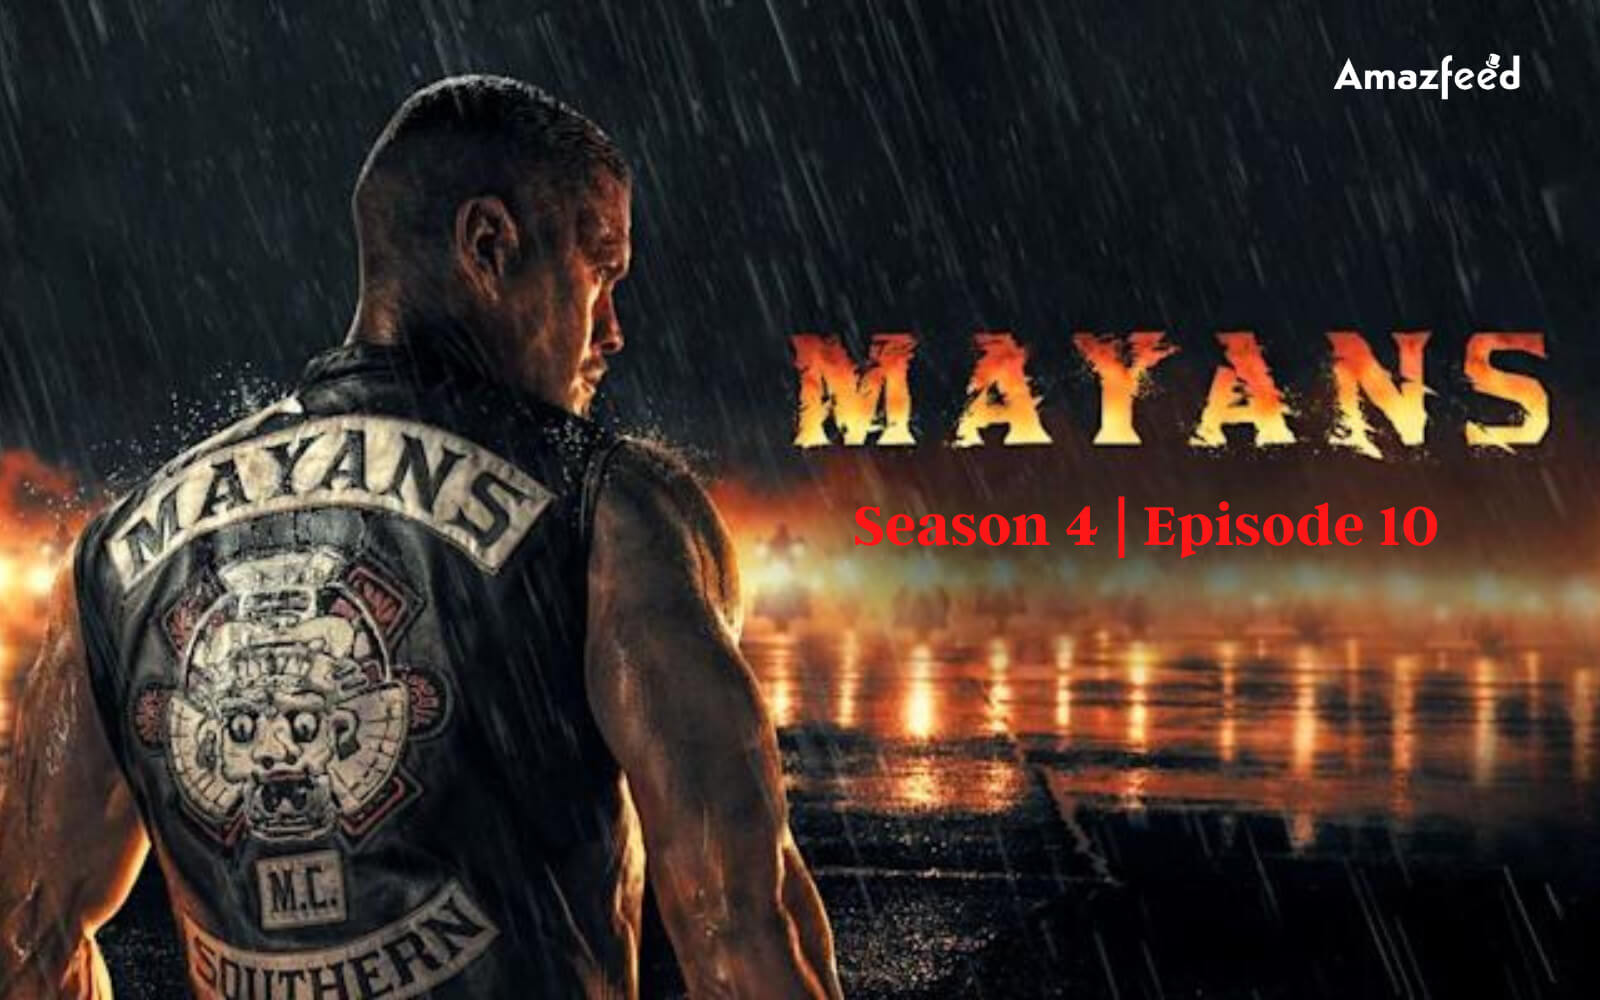 Mayans MC Season 4 Episode 10 release date